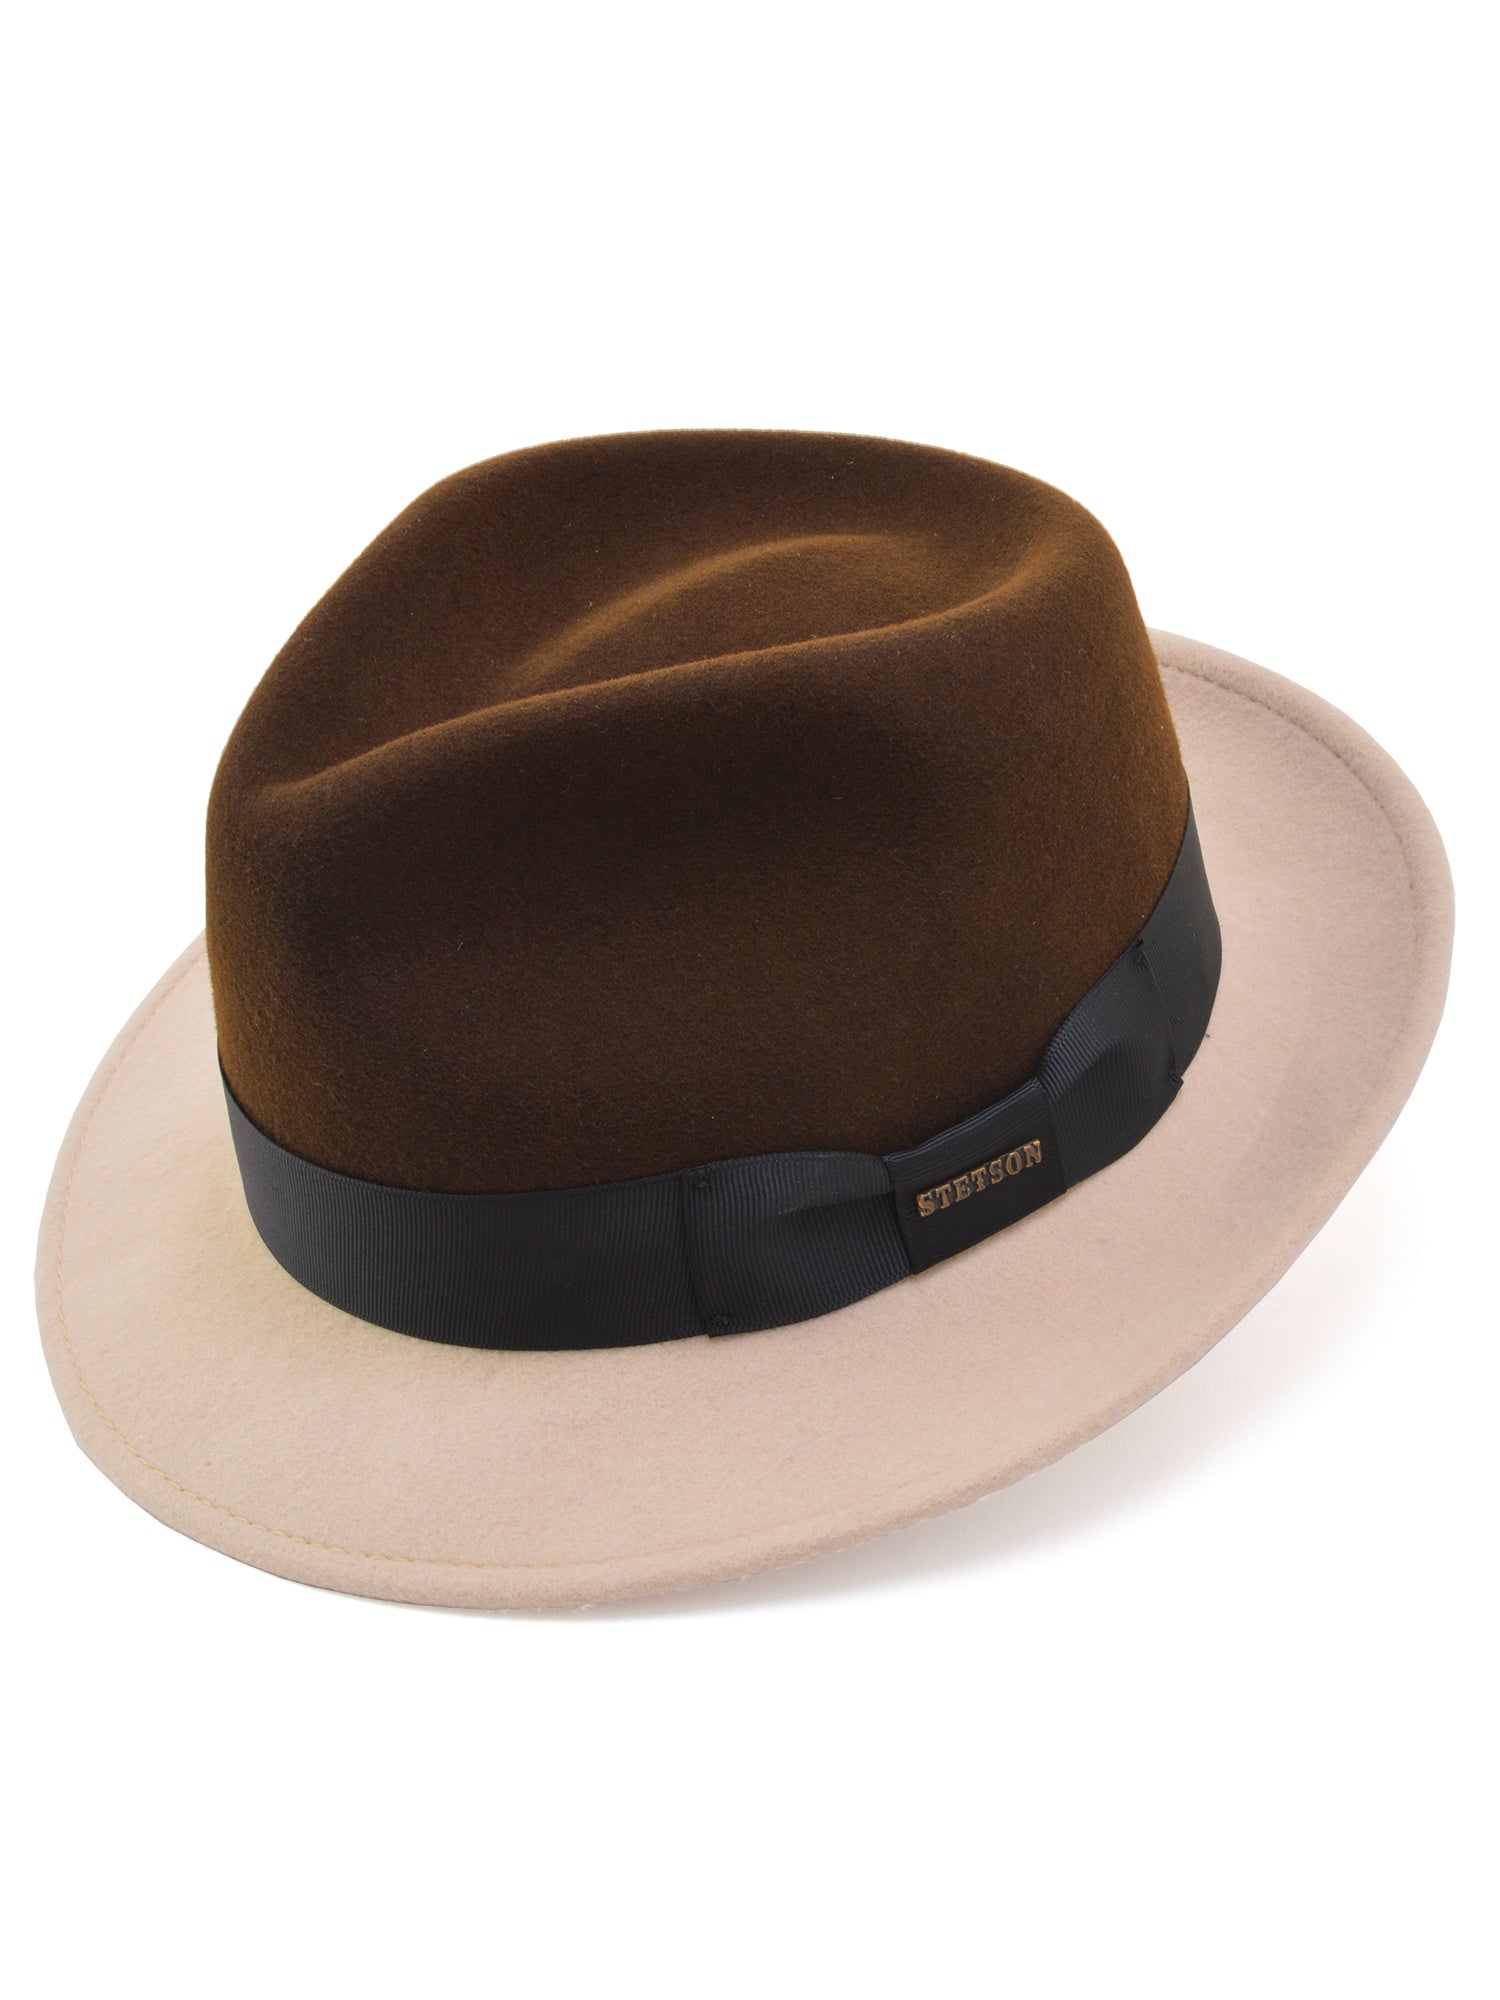 Stetson Two-Tone Duetoni Fedora Hat in Tan / Brown